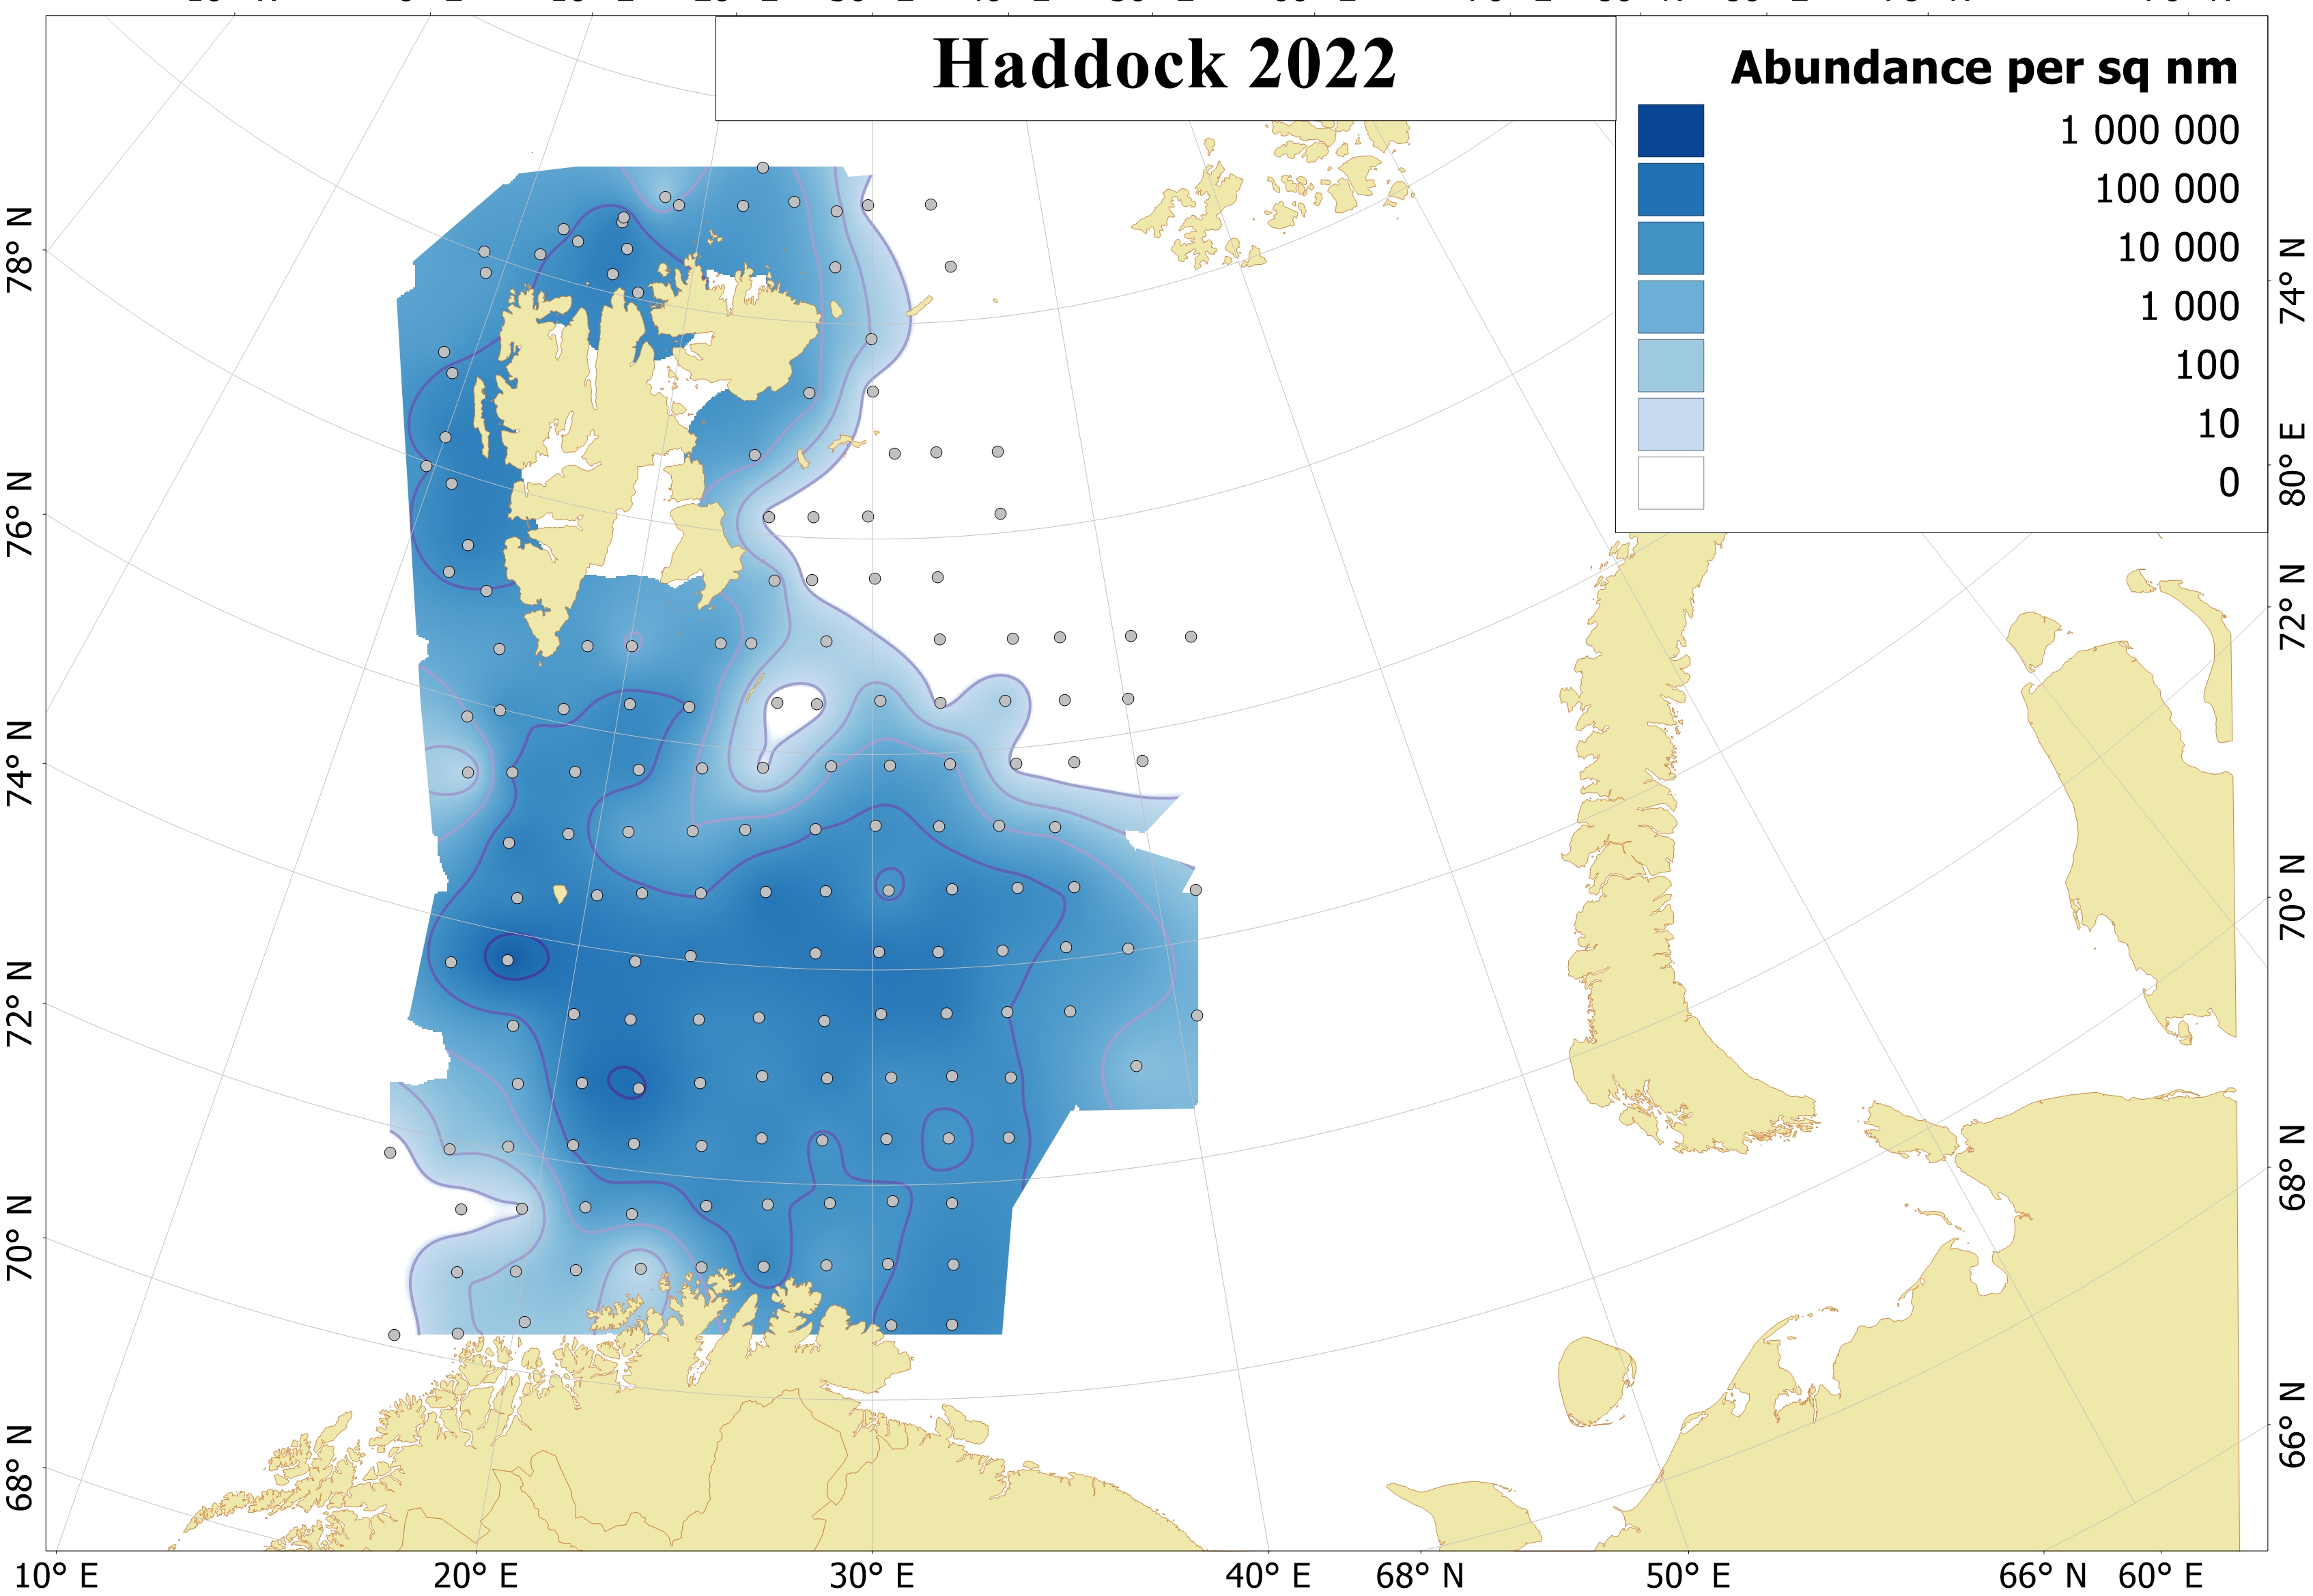 Ch 6 Distribution 0-group haddock 2022